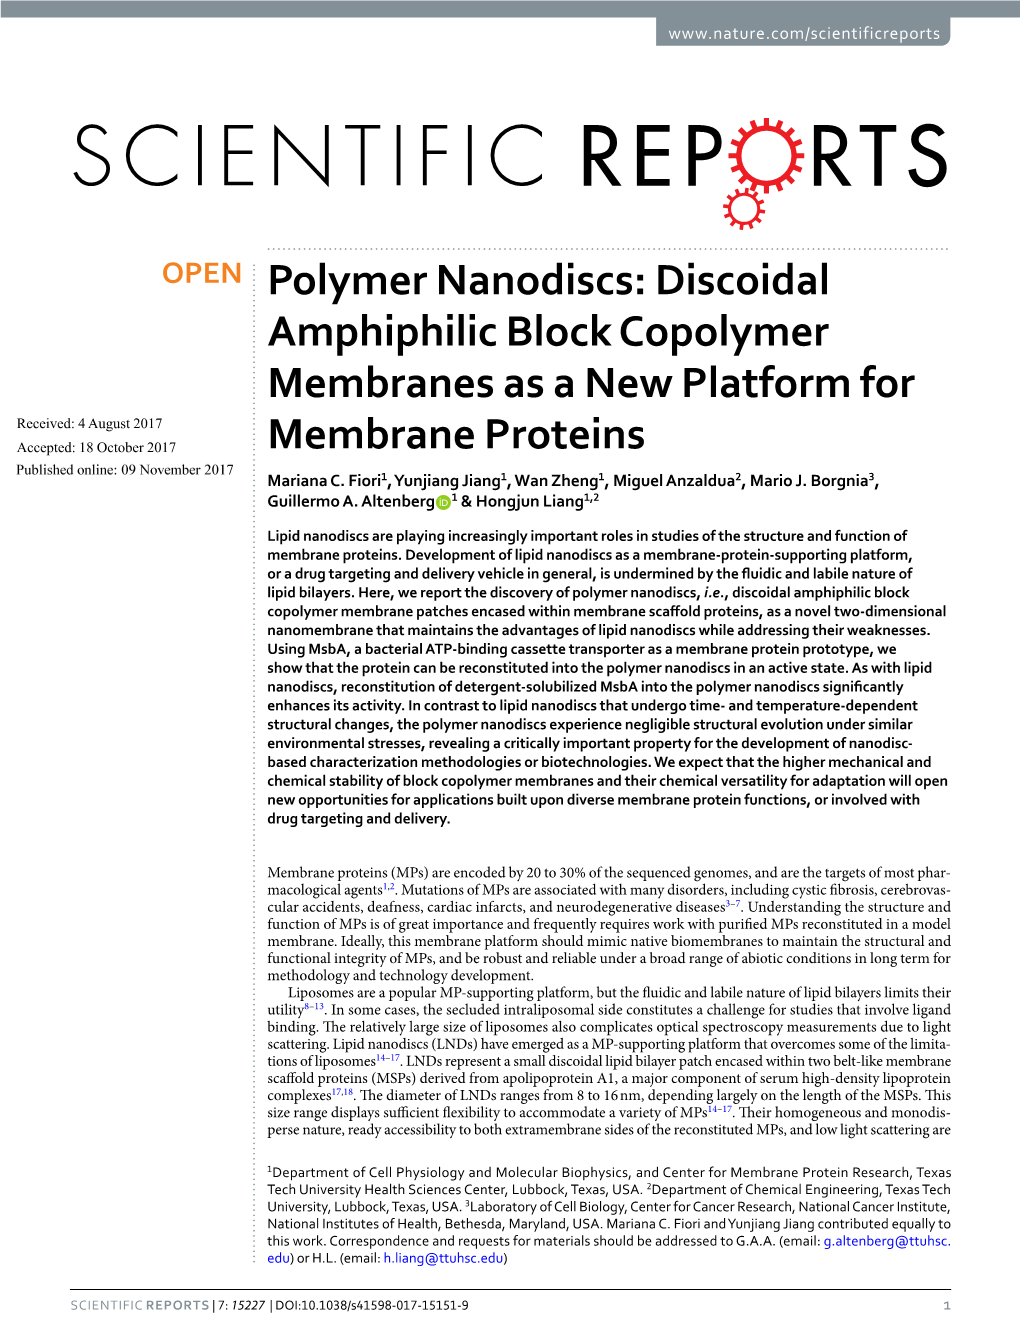 Polymer Nanodiscs: Discoidal Amphiphilic Block Copolymer